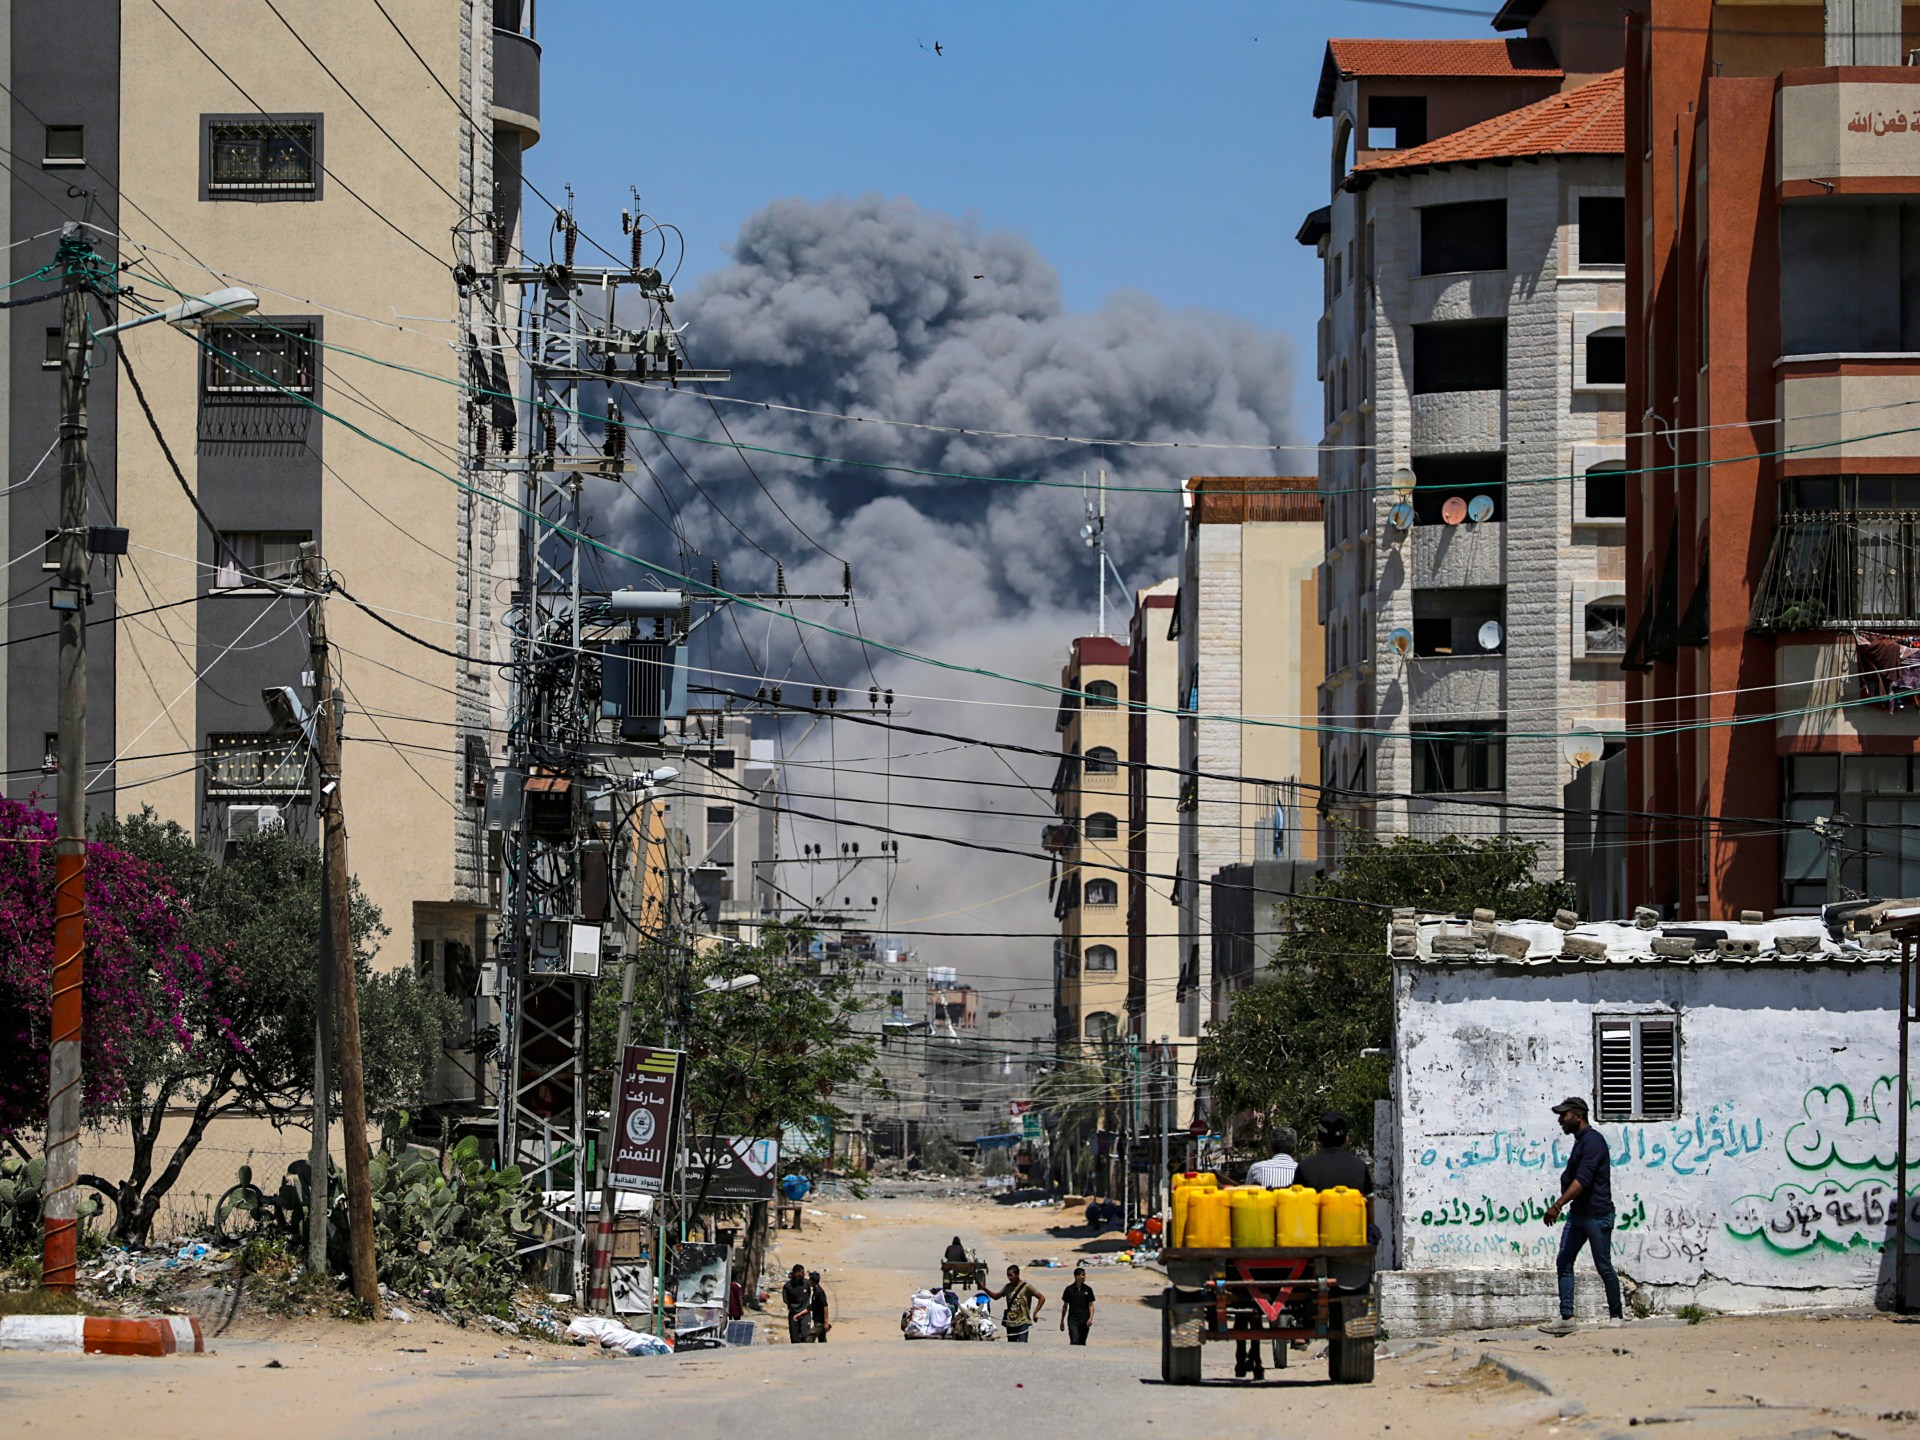 Israel’s war on Gaza live: UNRWA warns ‘dehumanisation rampant’ in Gaza war